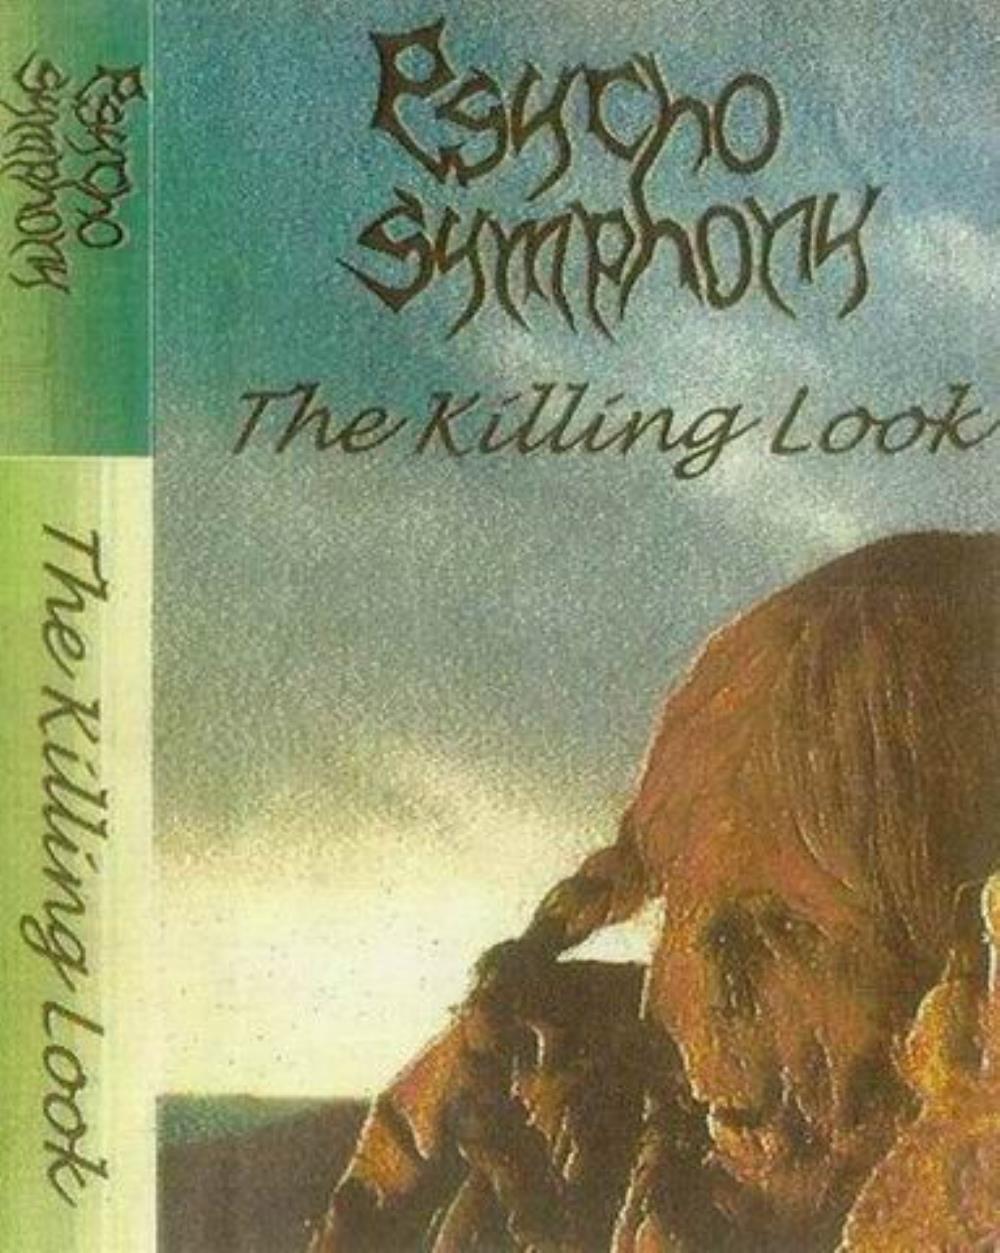 Psycho Symphony - The Killing Look CD (album) cover